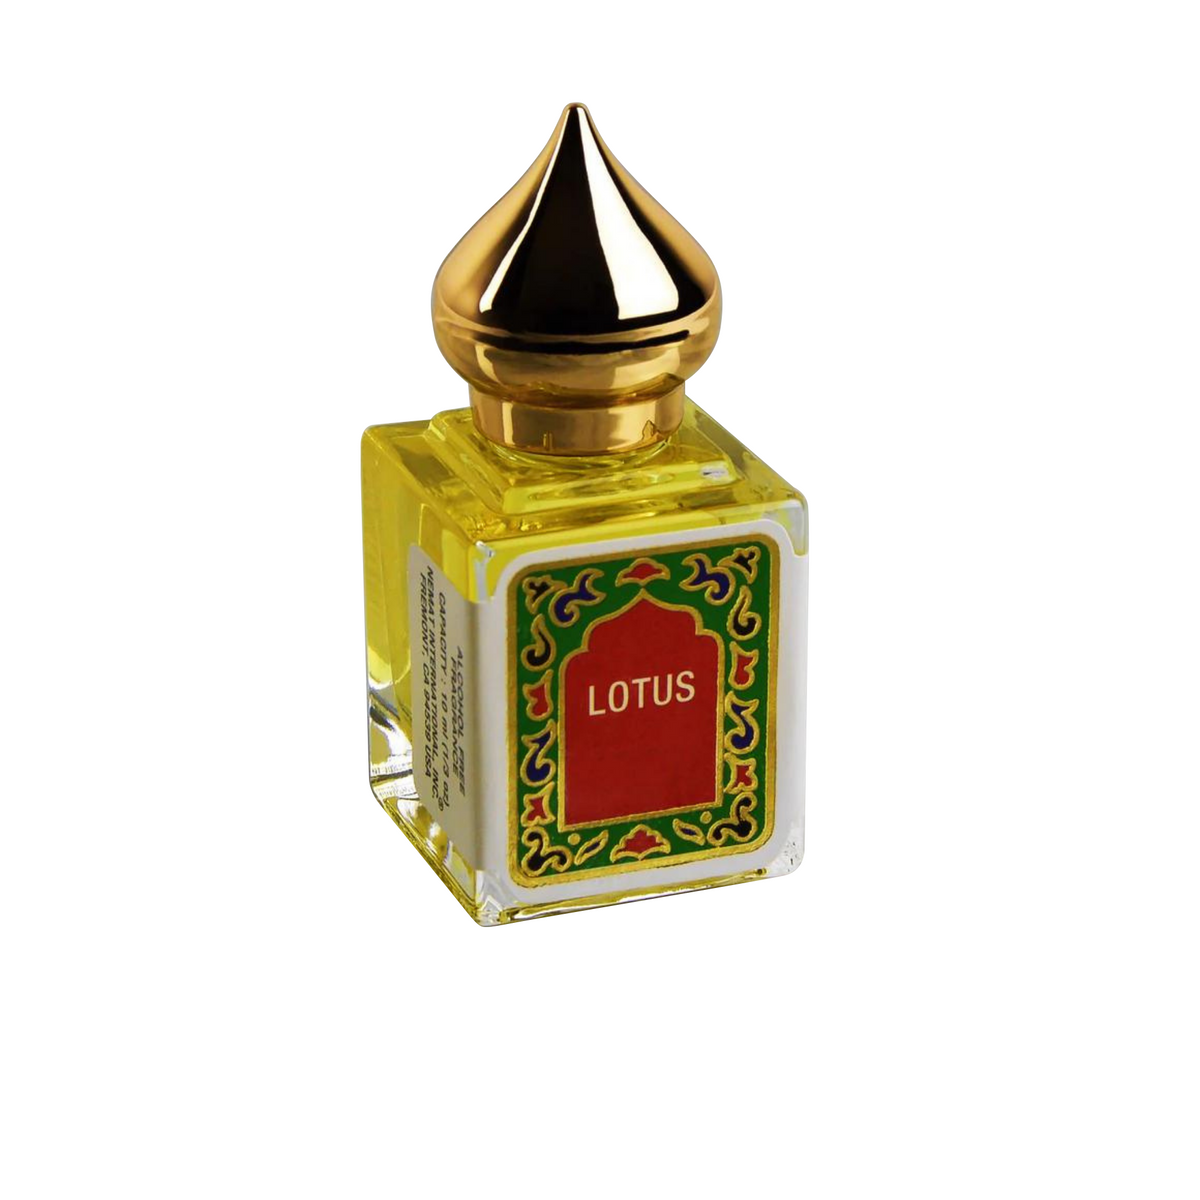 Primary image of Lotus Fragrance Minaret Cap